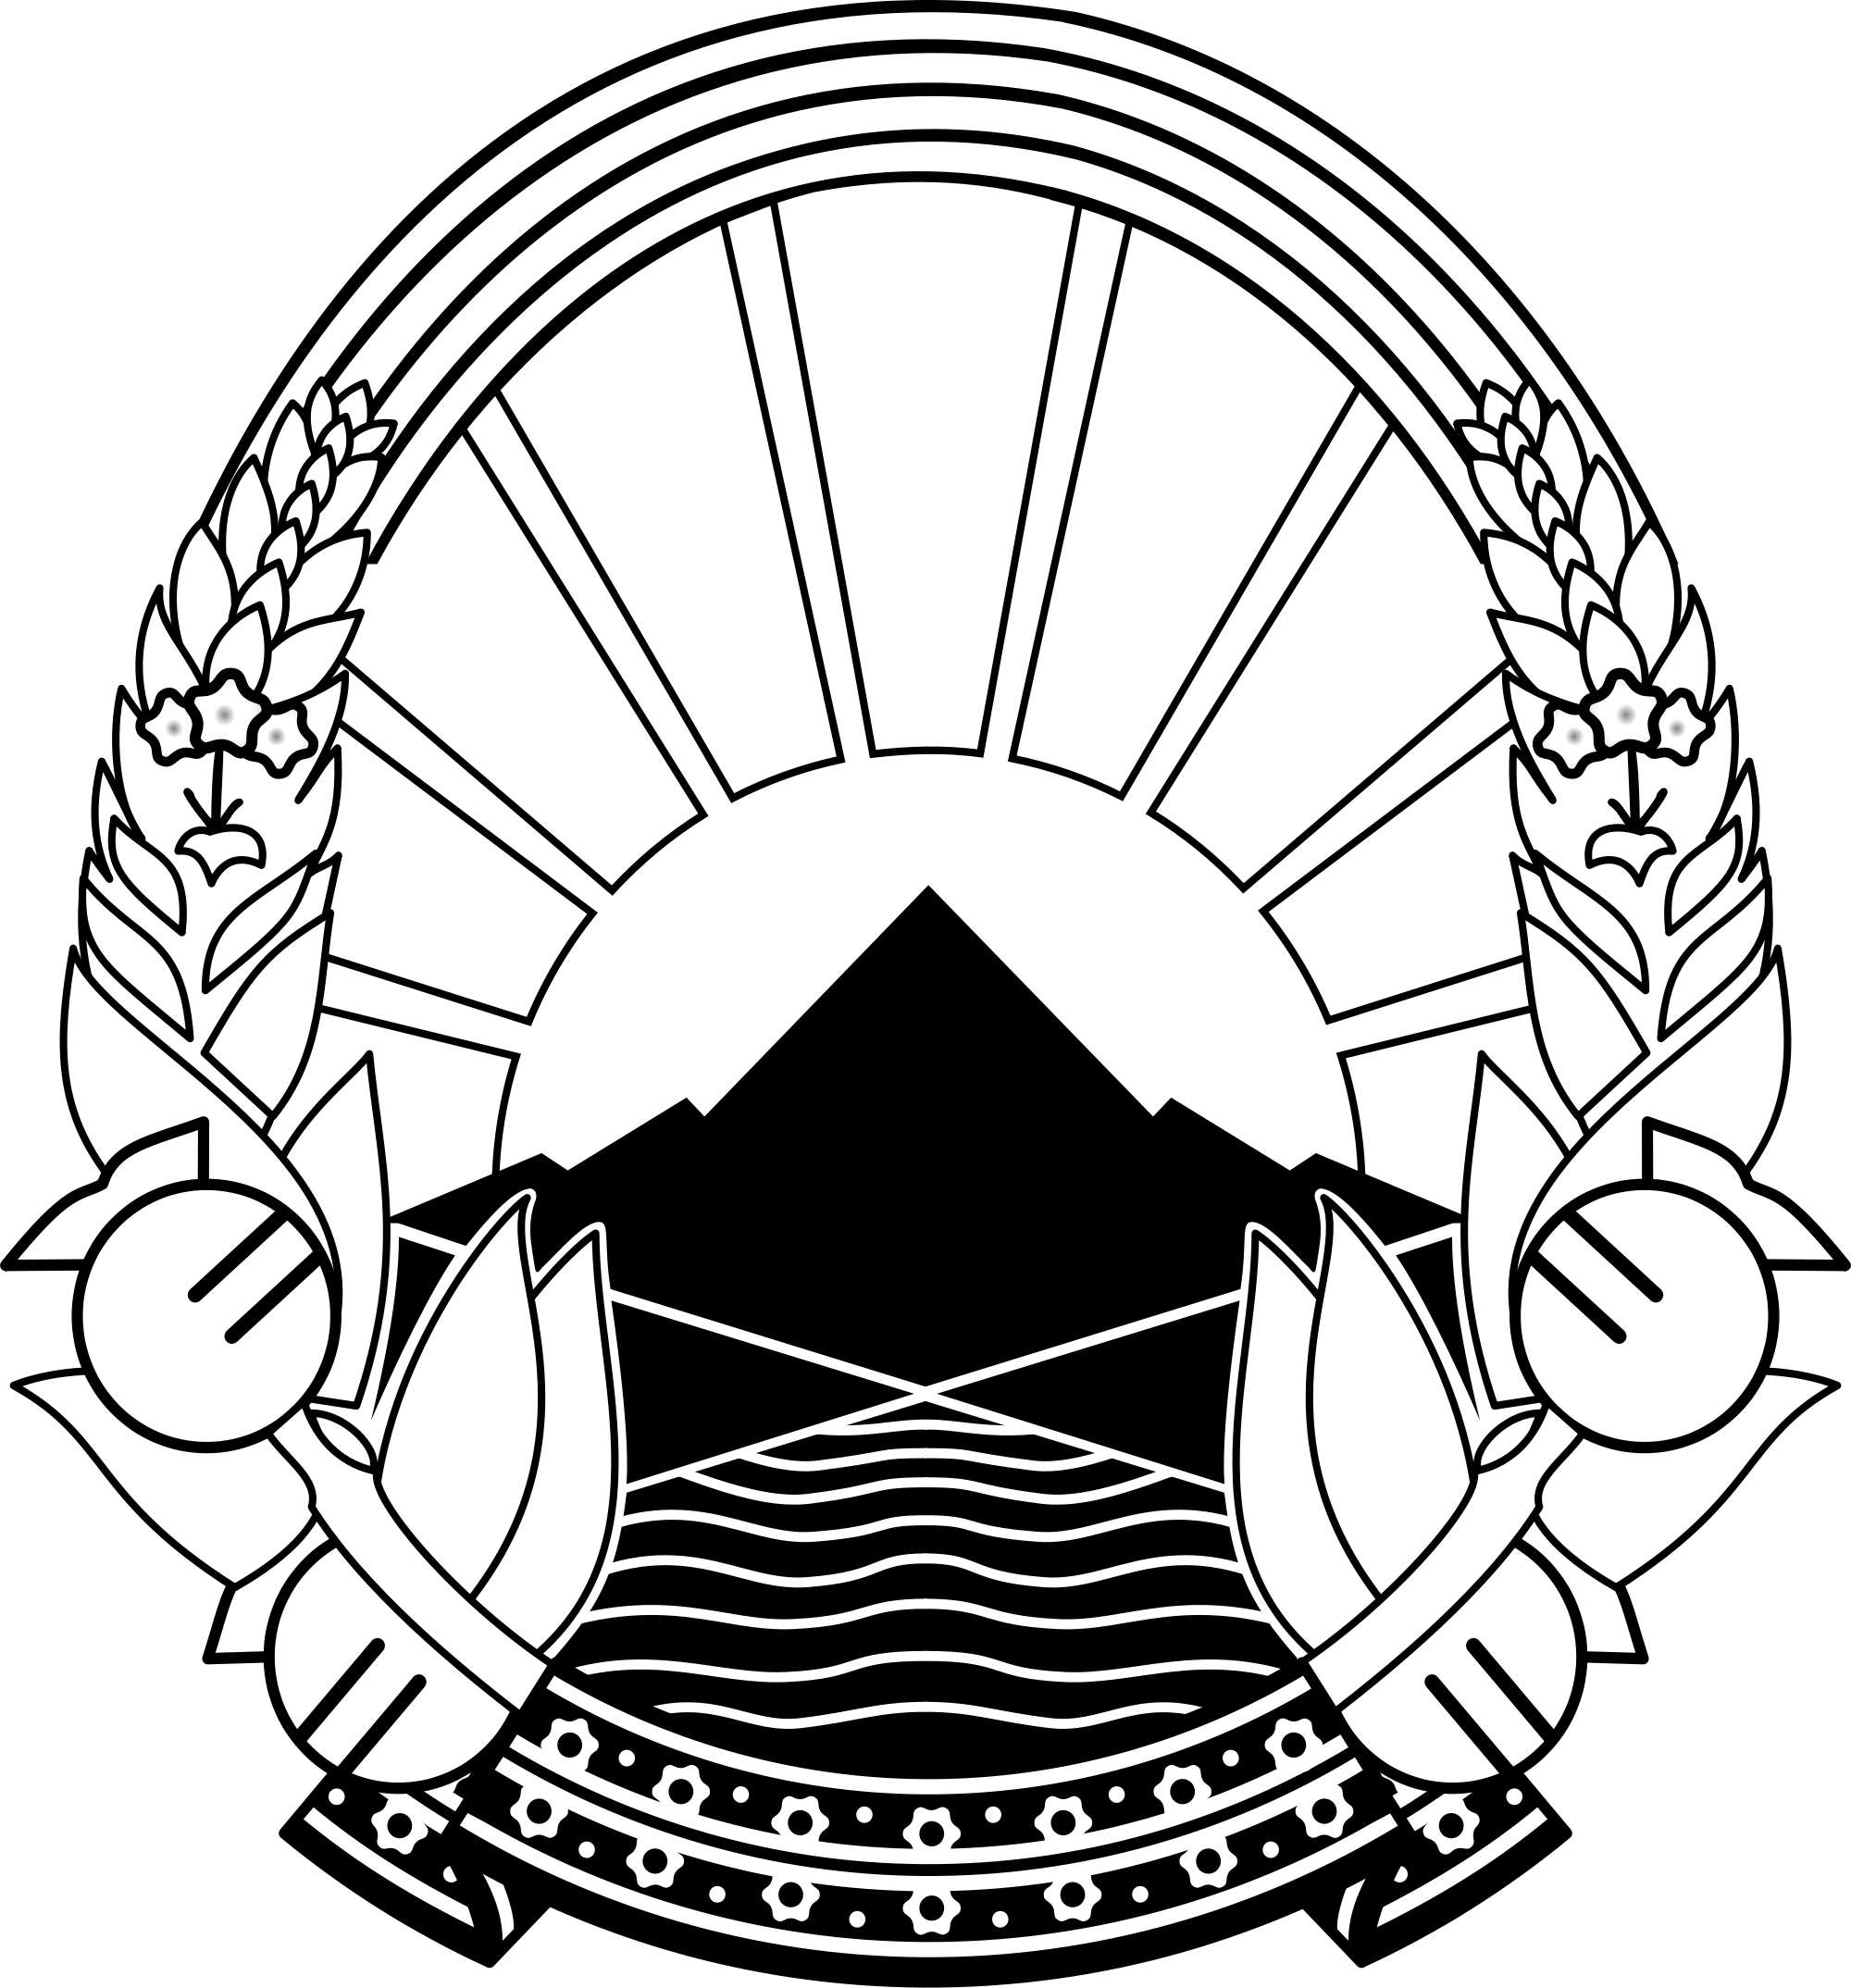 Open - Republic Of Macedonia Coat Of Arms (2000x2148)